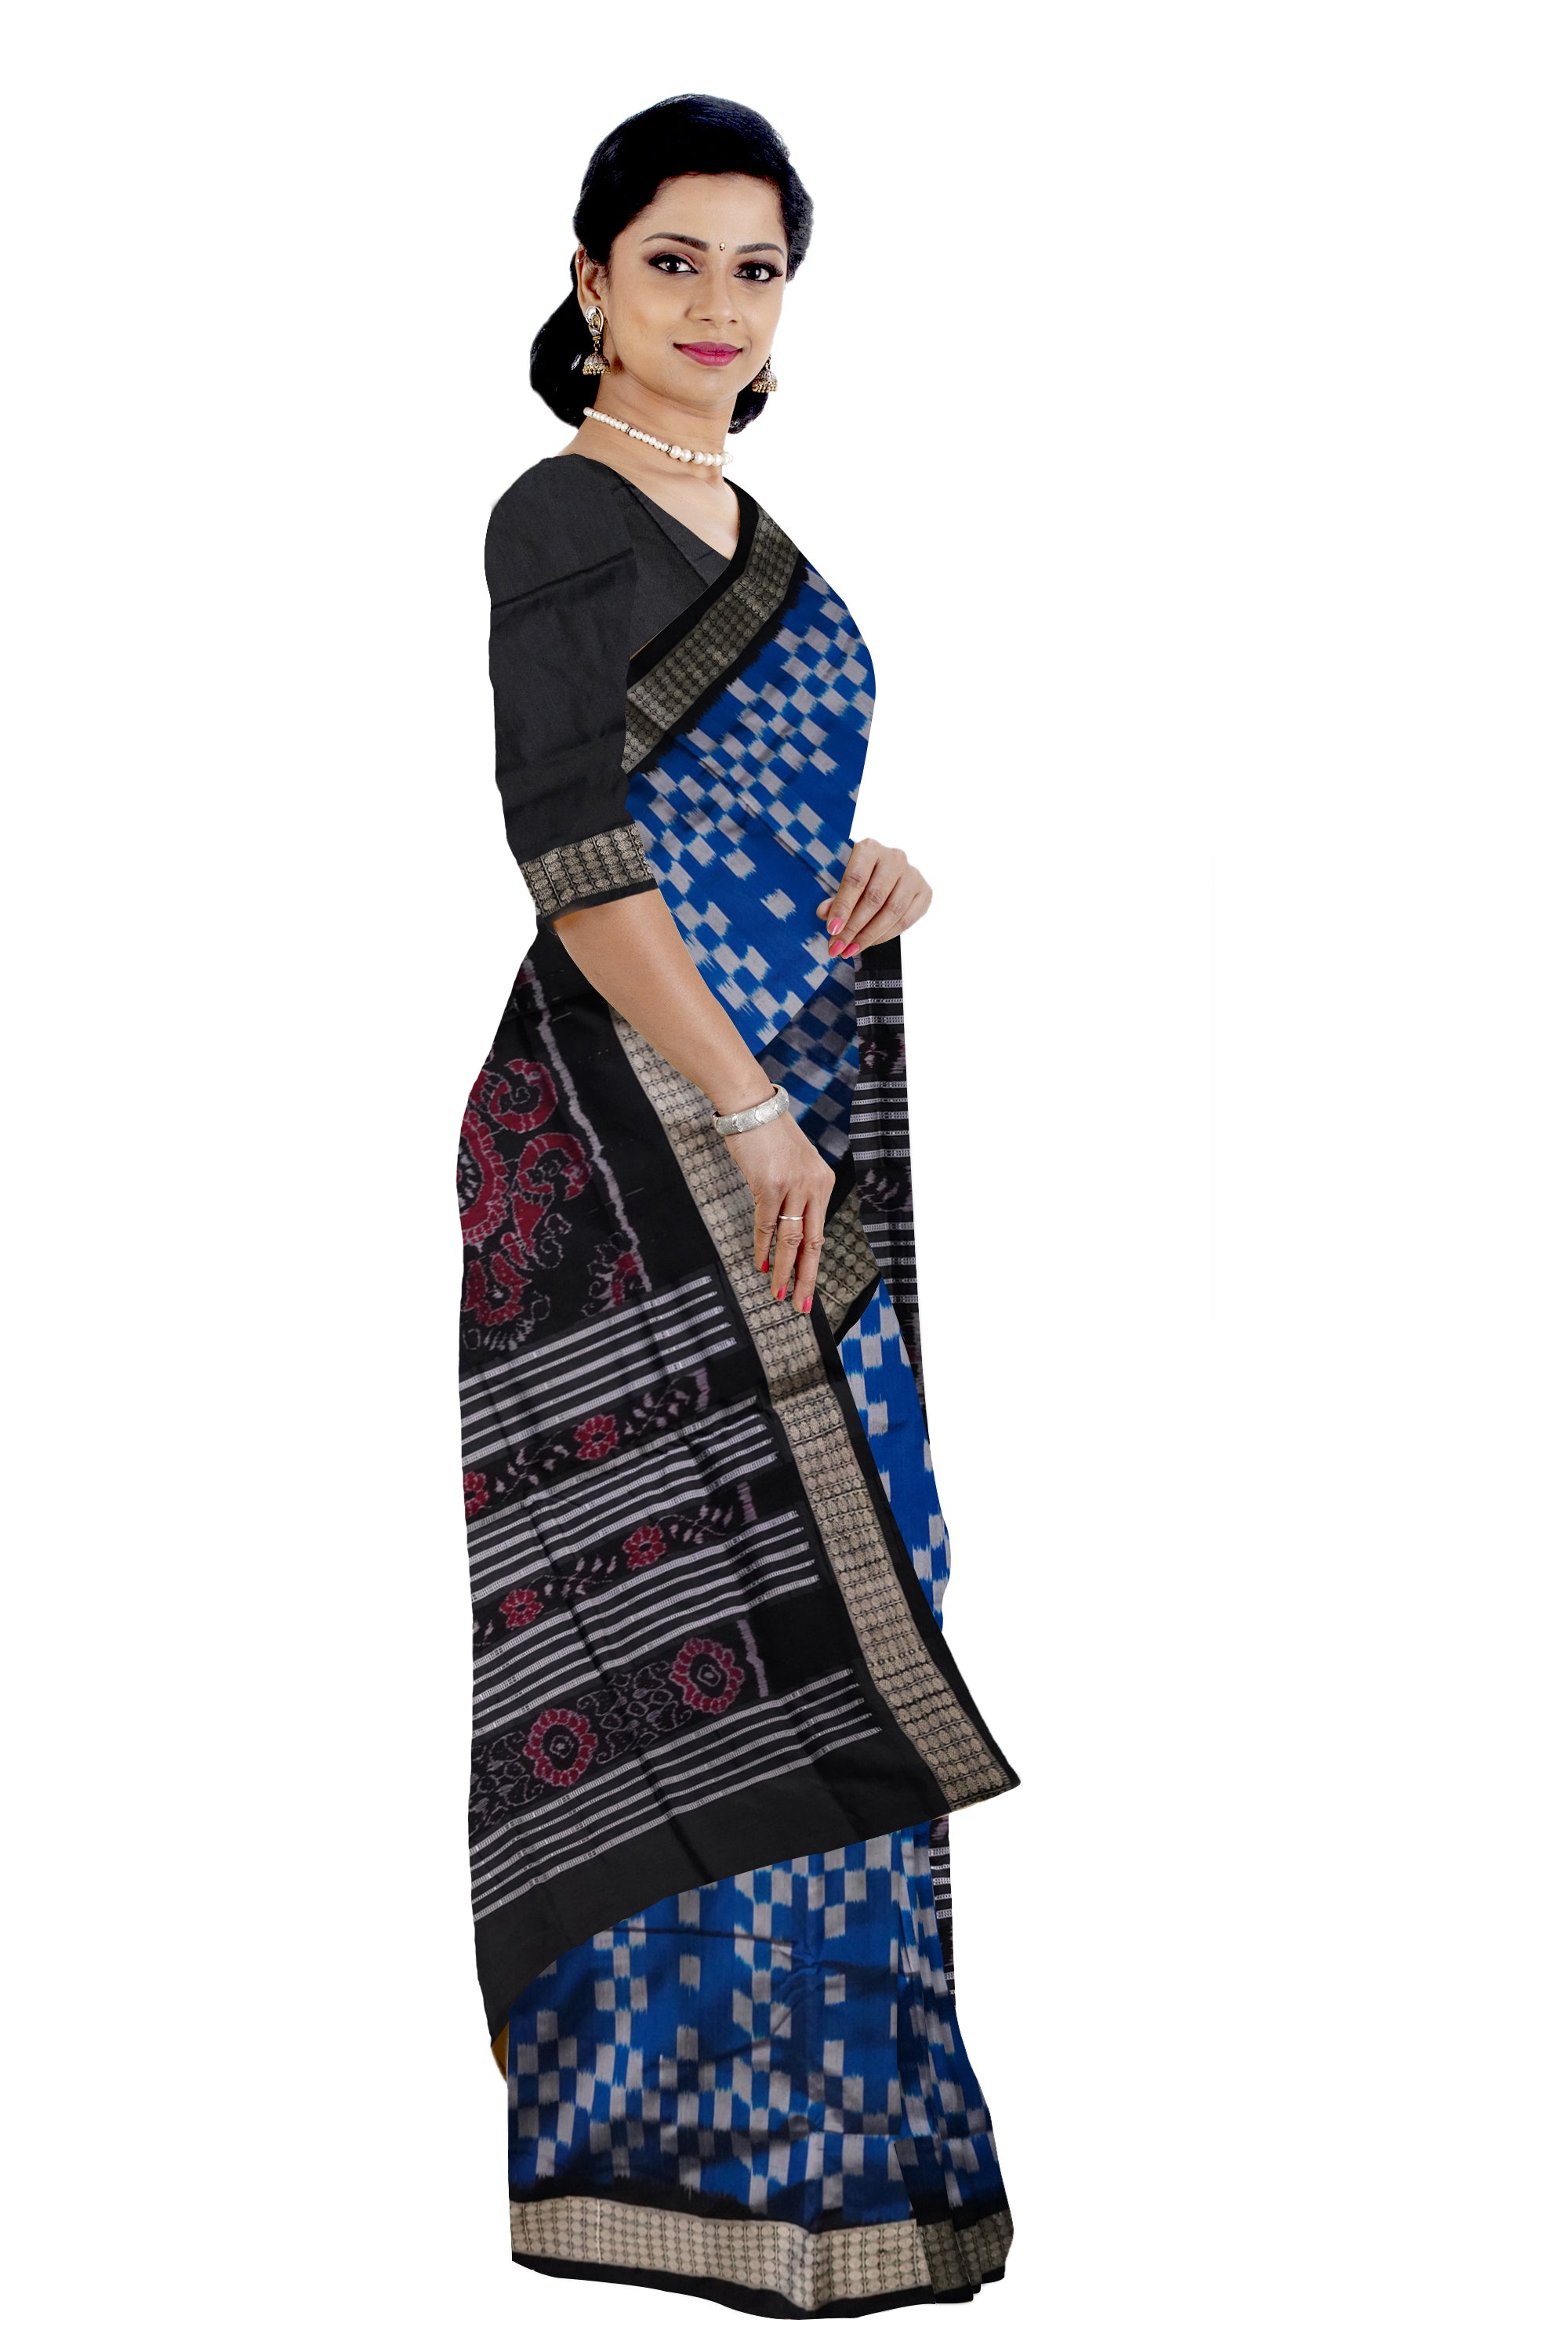 Full body pasapali pattern sambalpuri pata saree in Sky and Black colour. - Koshali Arts & Crafts Enterprise